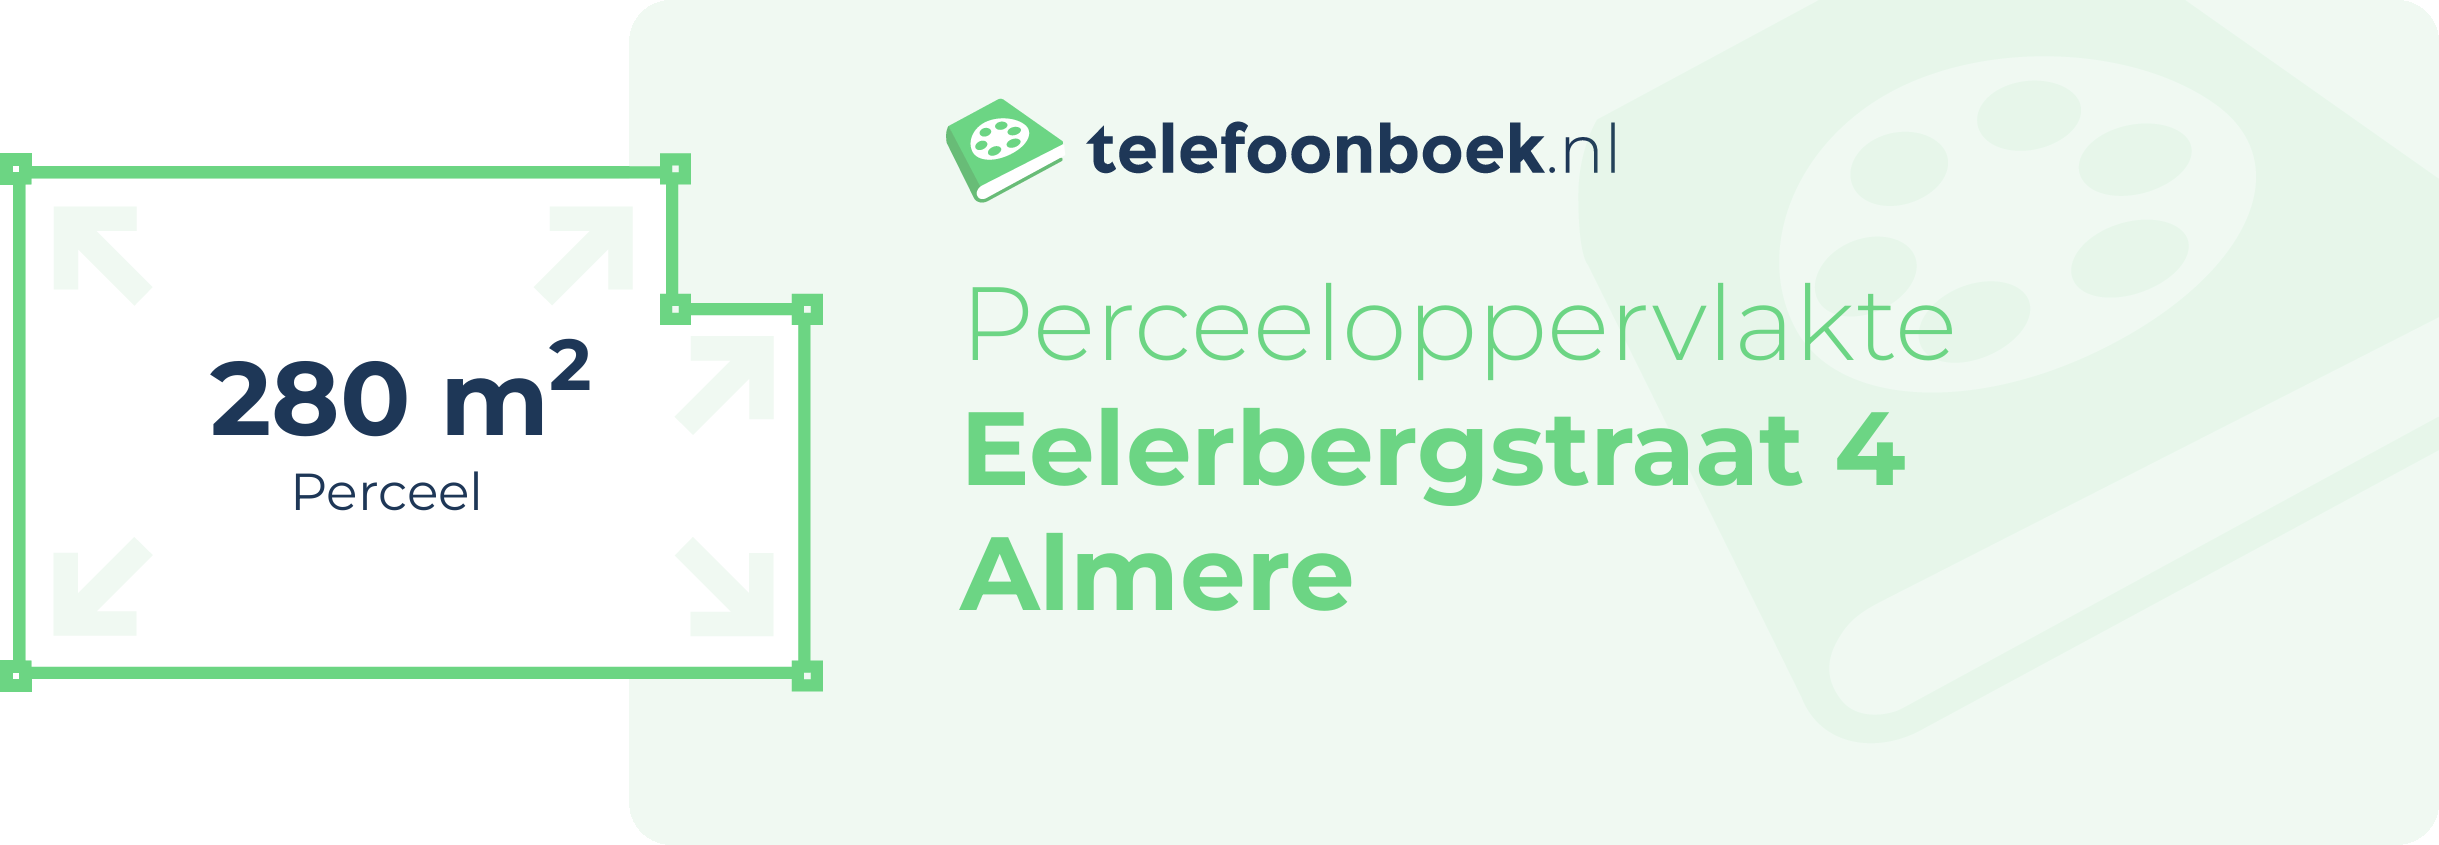 Perceeloppervlakte Eelerbergstraat 4 Almere